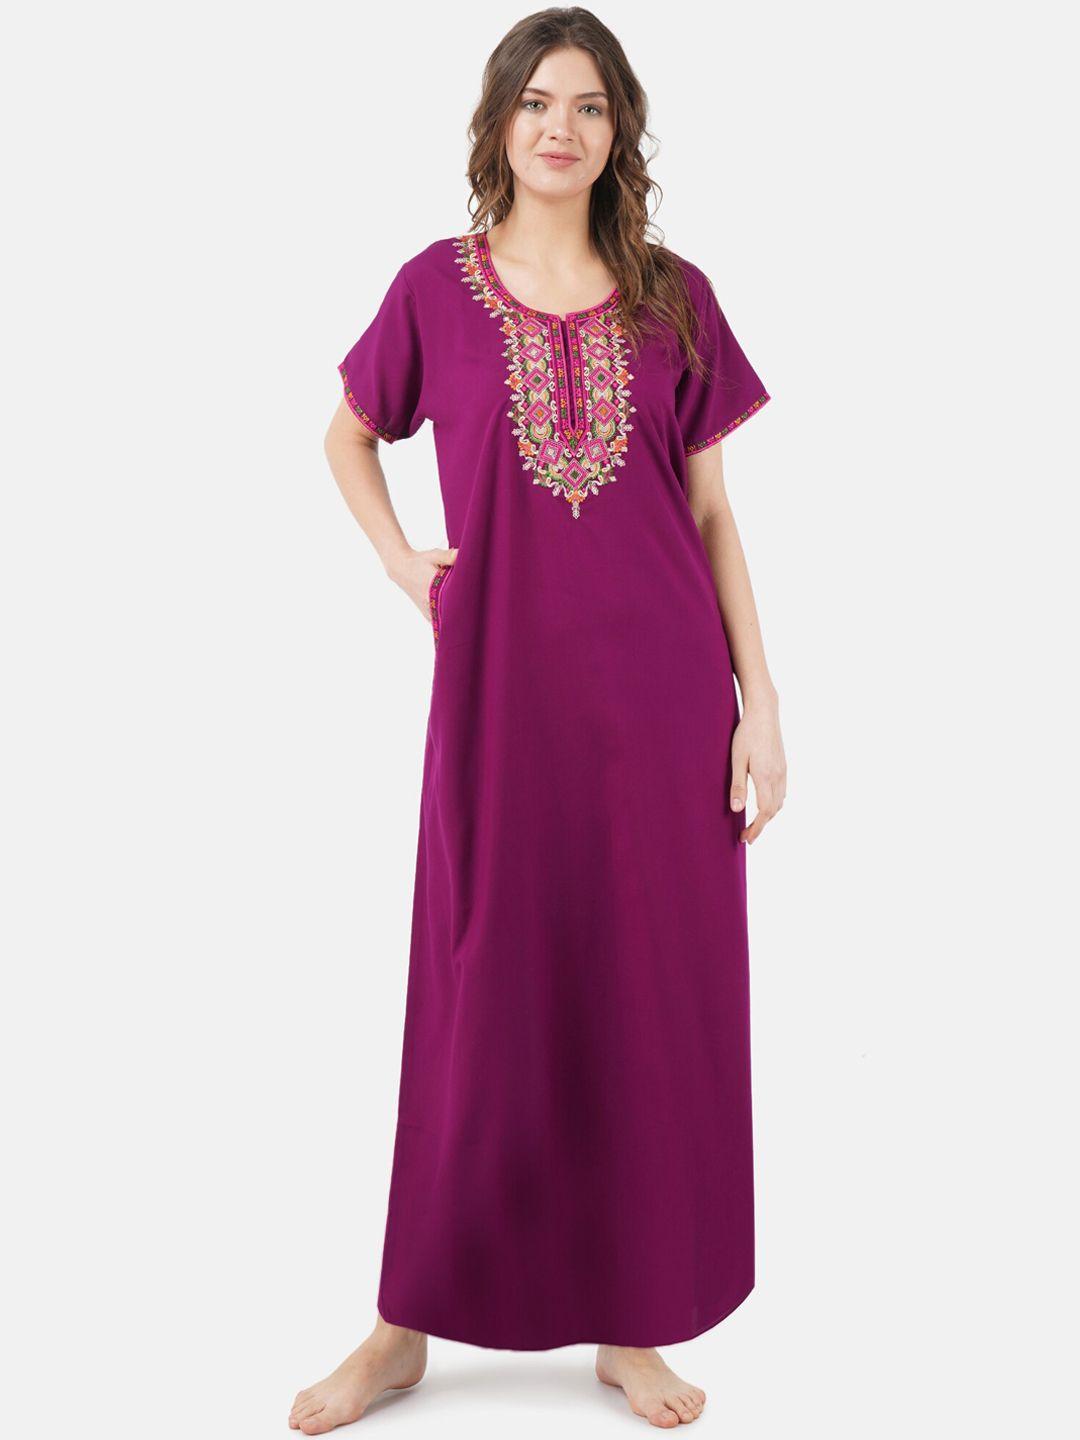 koi sleepwear woman purple embroidered cotton maxi nightdress with pockets